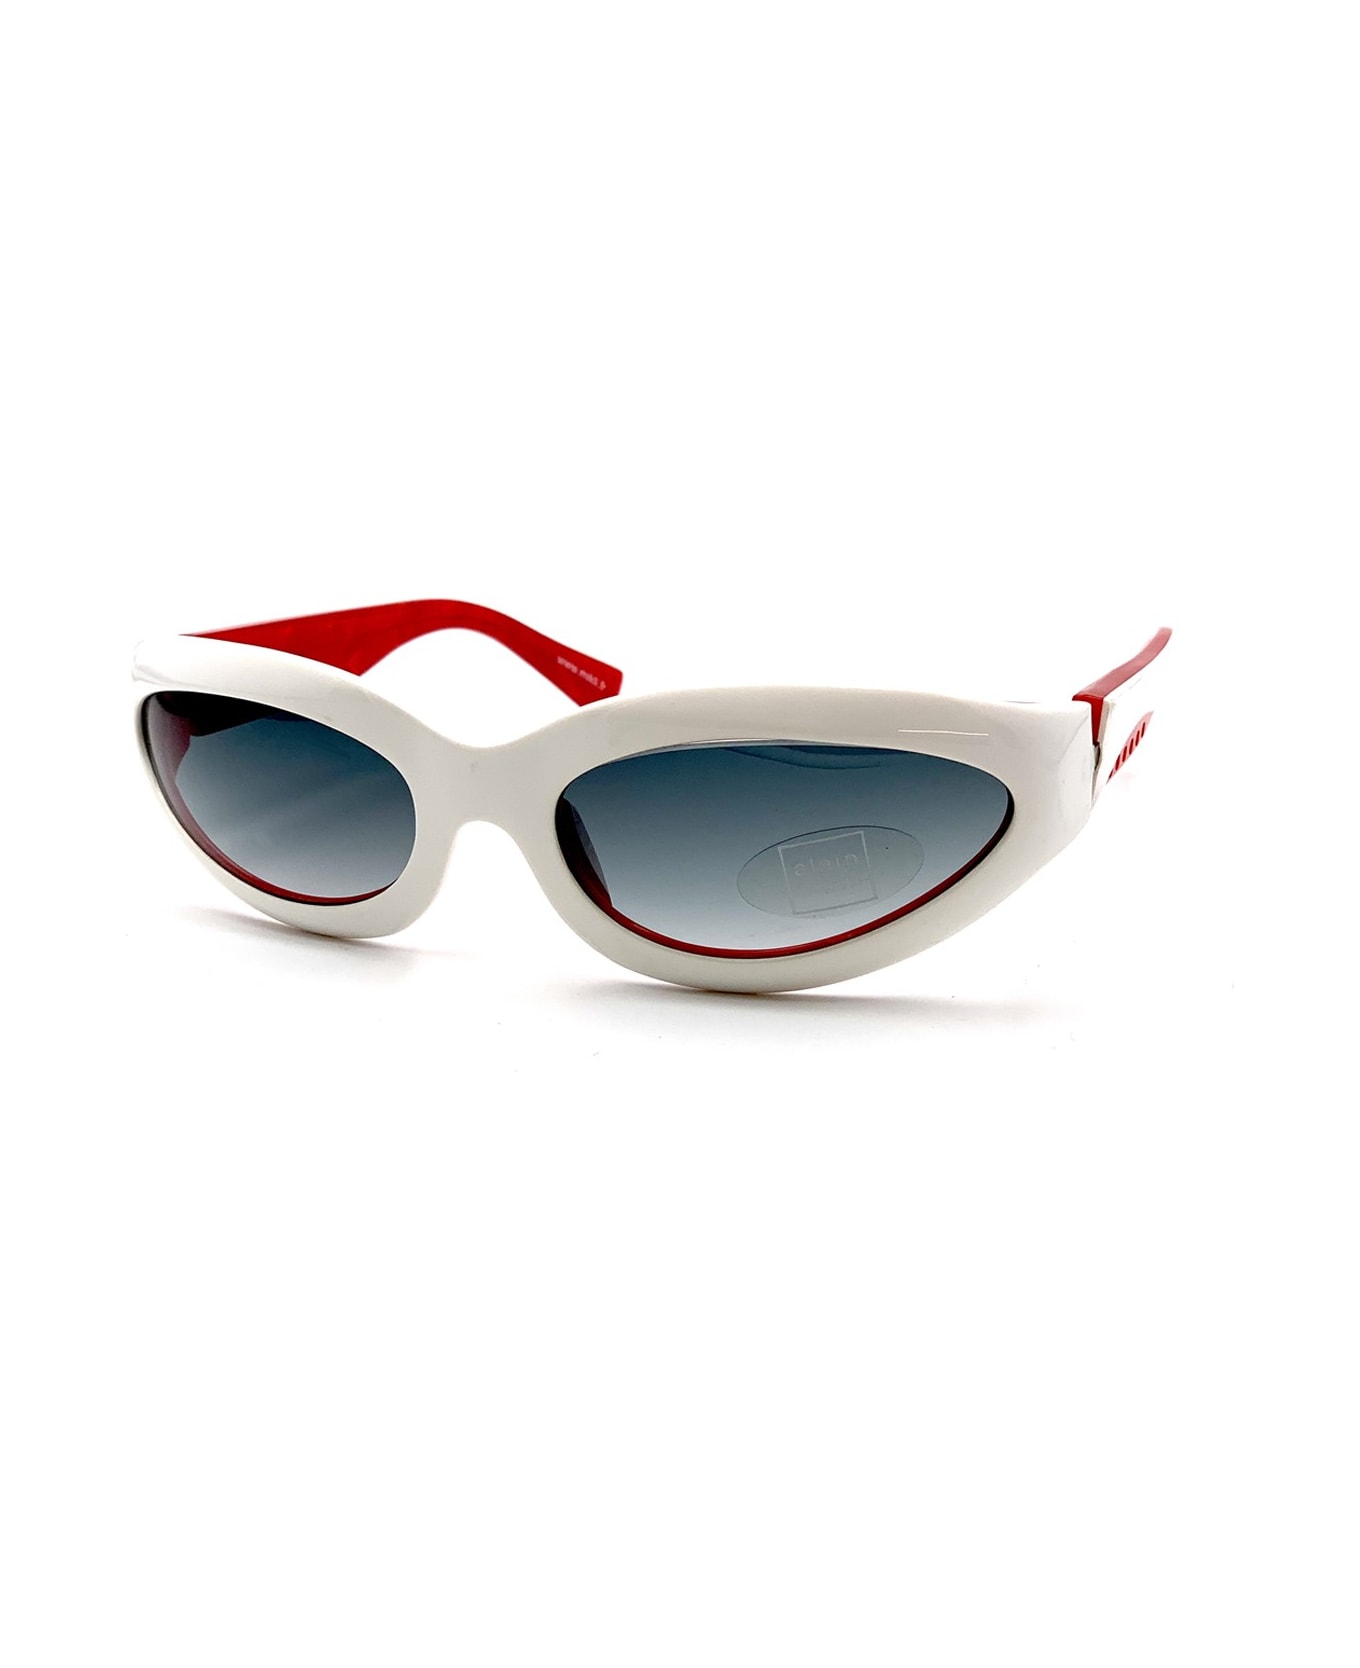 Alain Mikli A0312 Sunglasses - Bianco